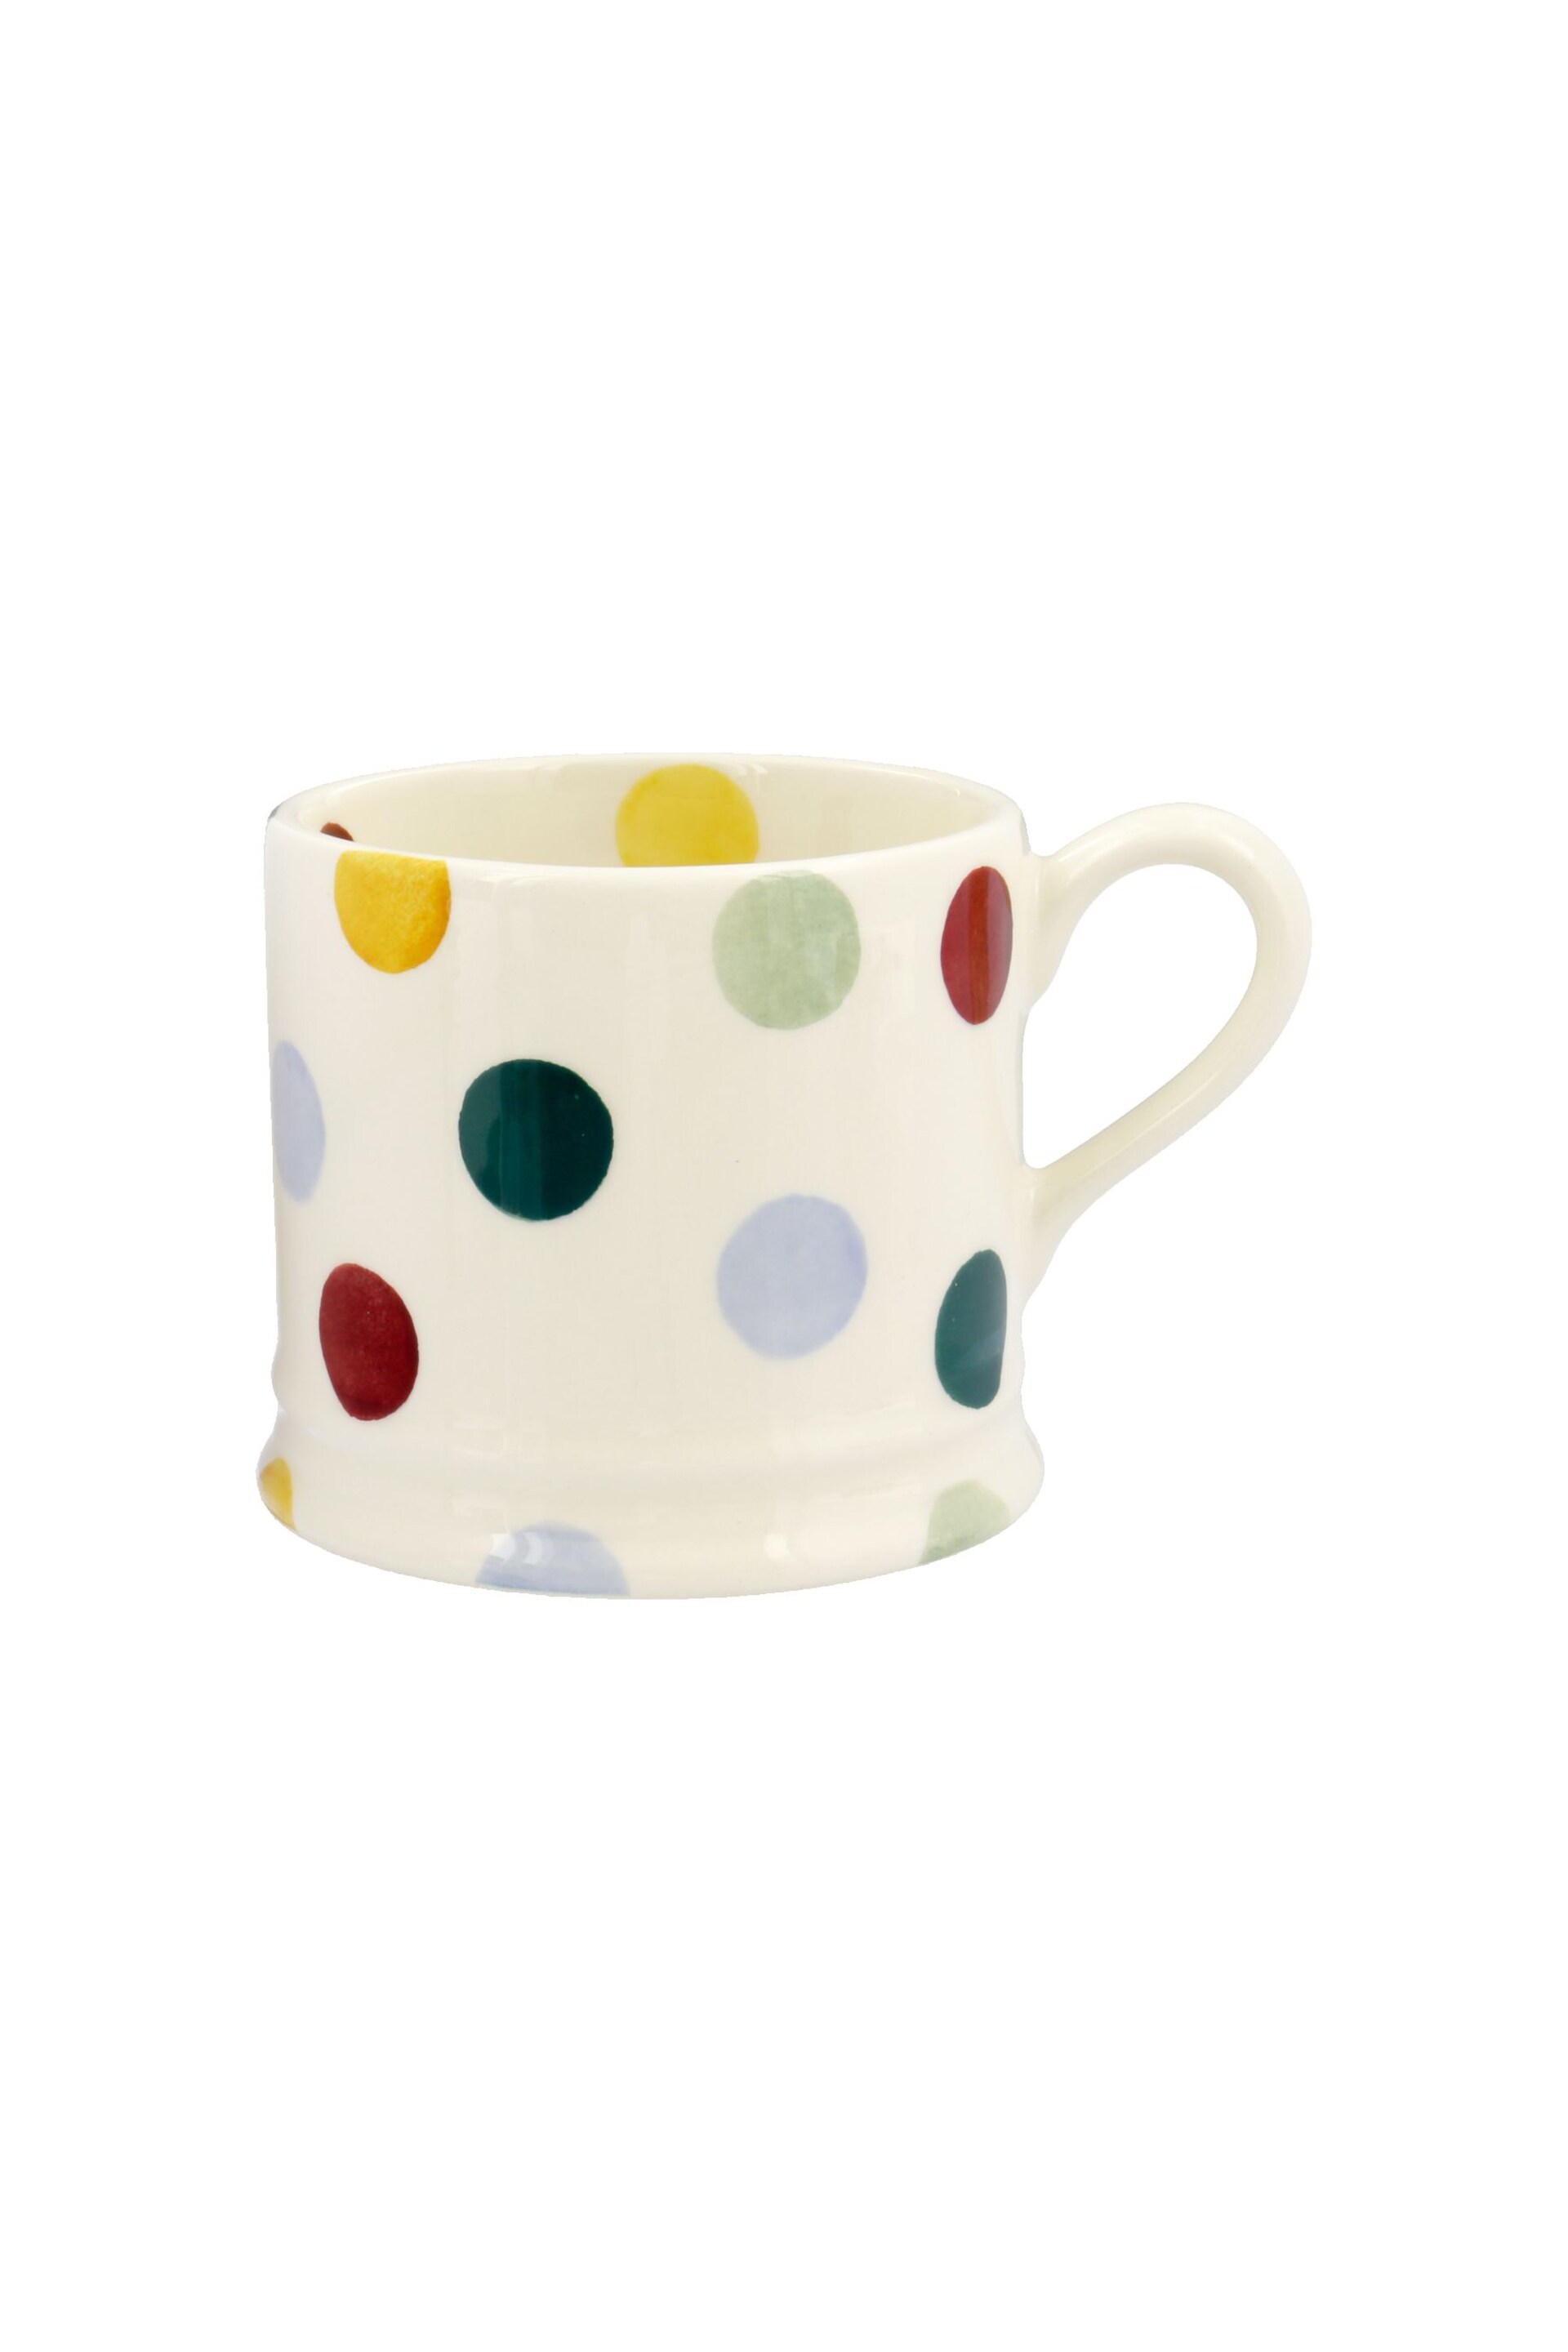 Emma Bridgewater Cream Polka Dot Small Mug - Image 2 of 4